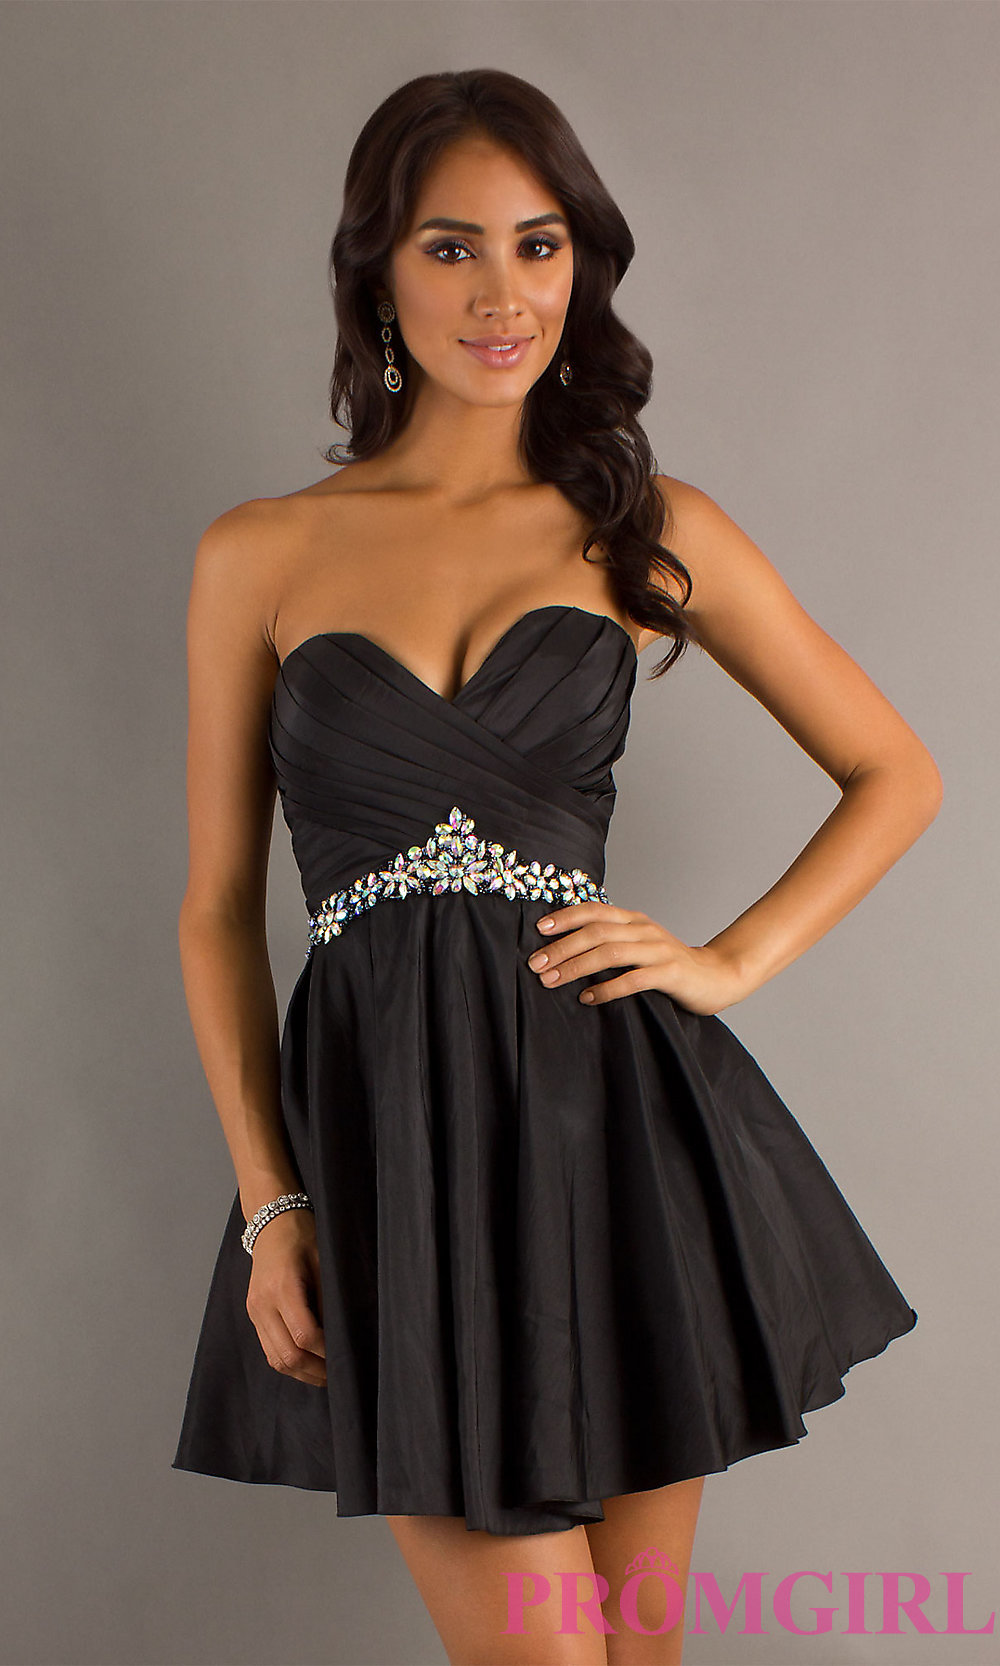 Strapless Black Bridesmaid Dress - Perfect Choices